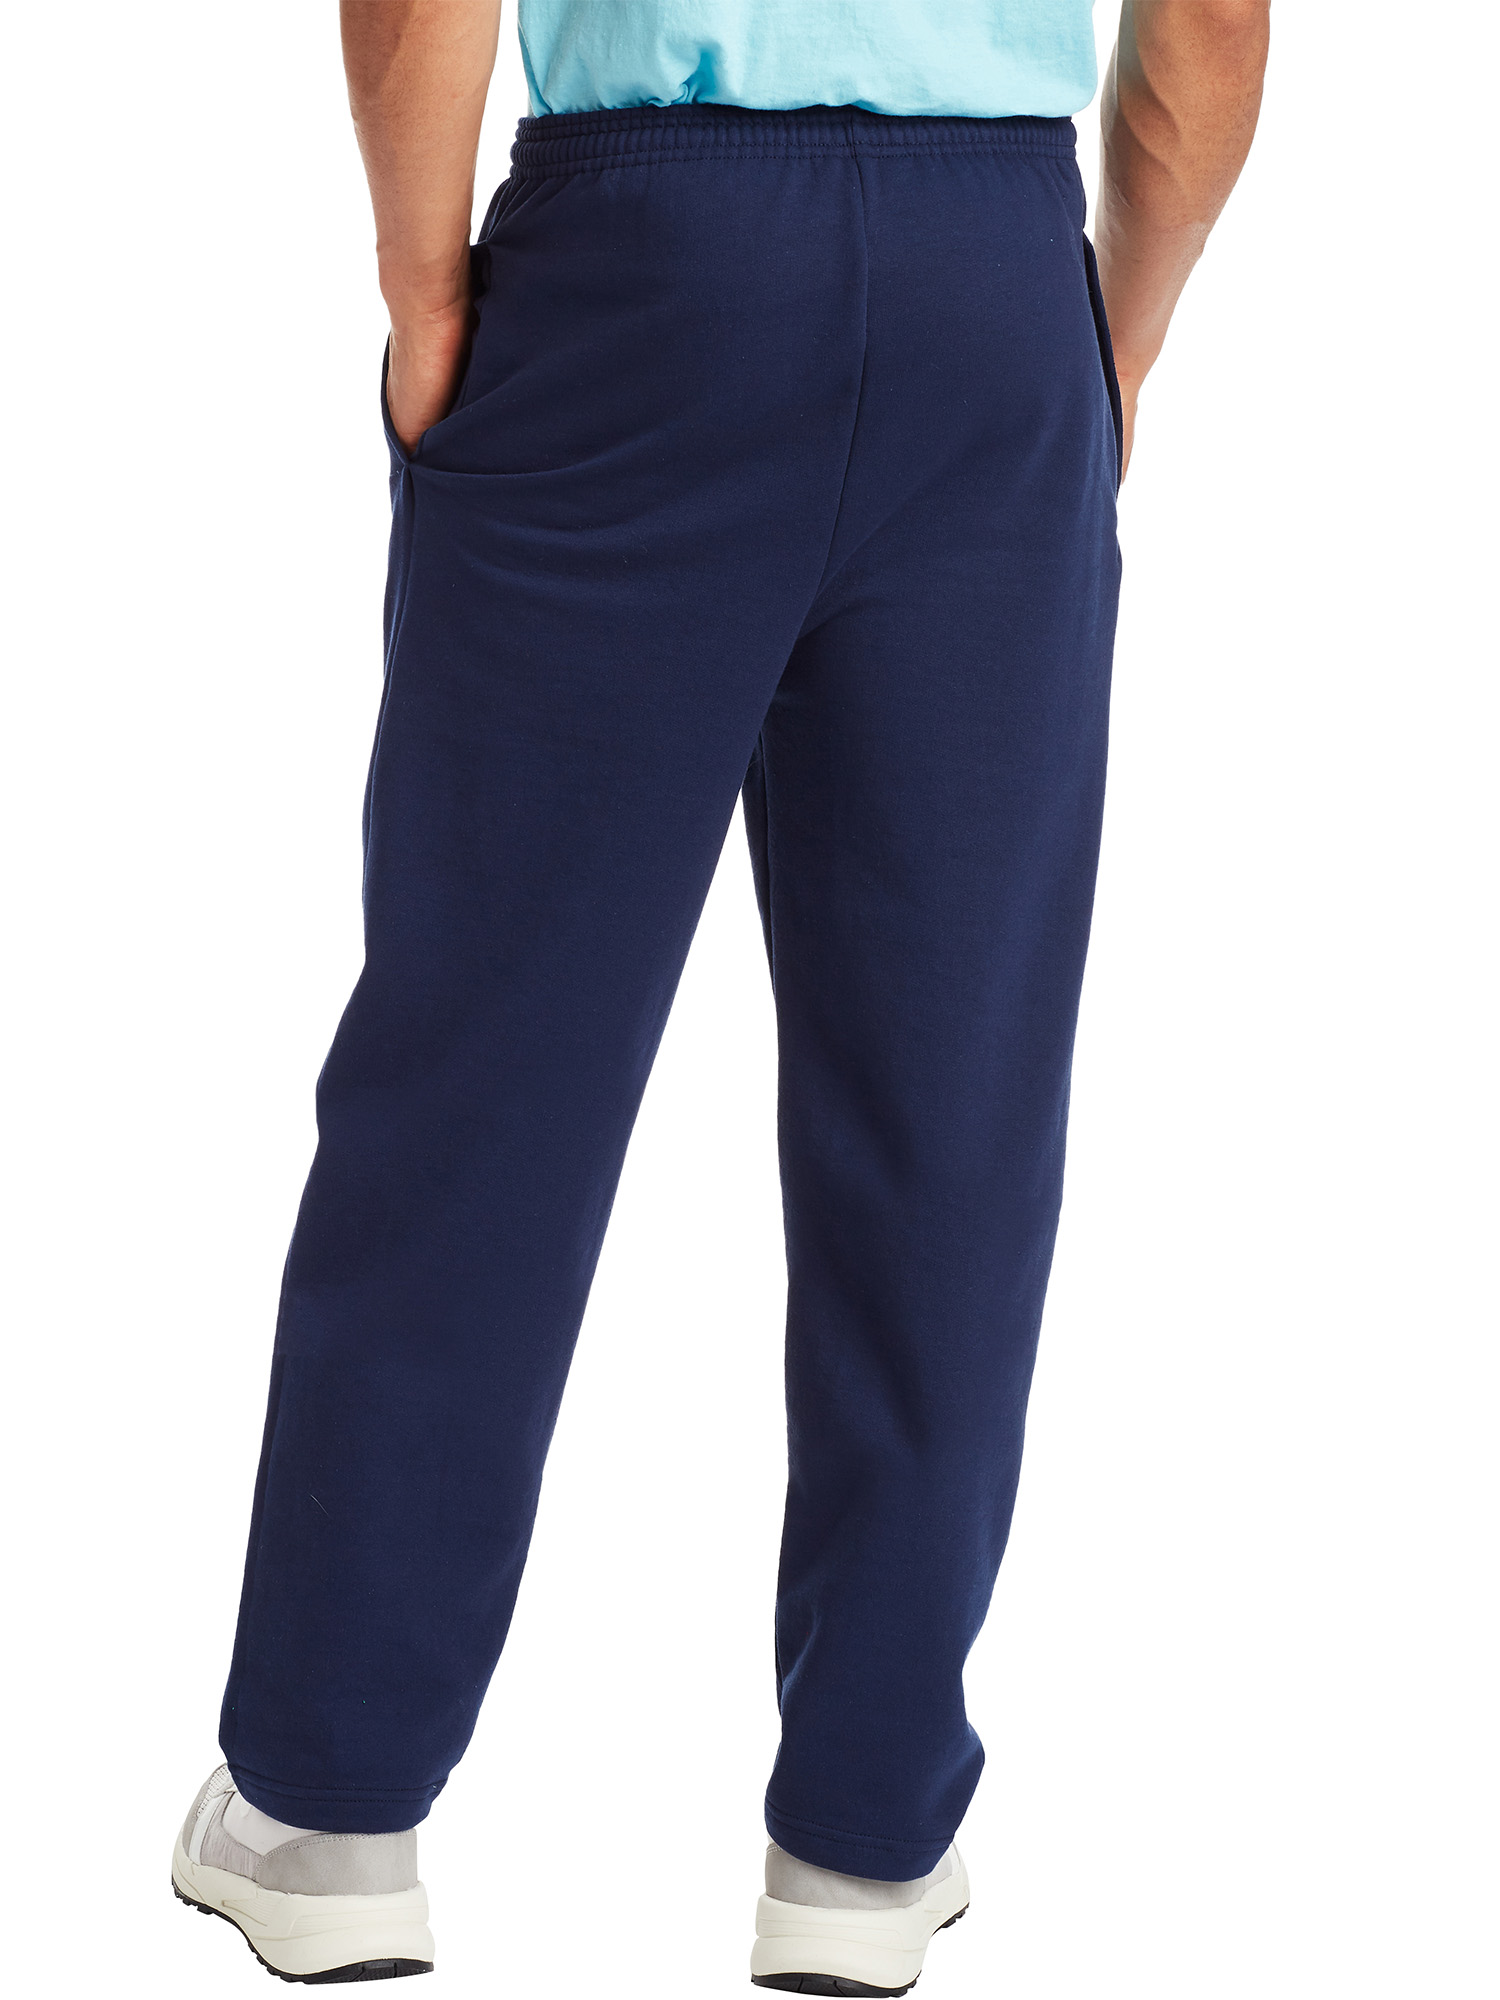 Hanes Men's and Big Men's EcoSmart Fleece Sweatpants with Pockets, Sizes S-3XL - image 2 of 5